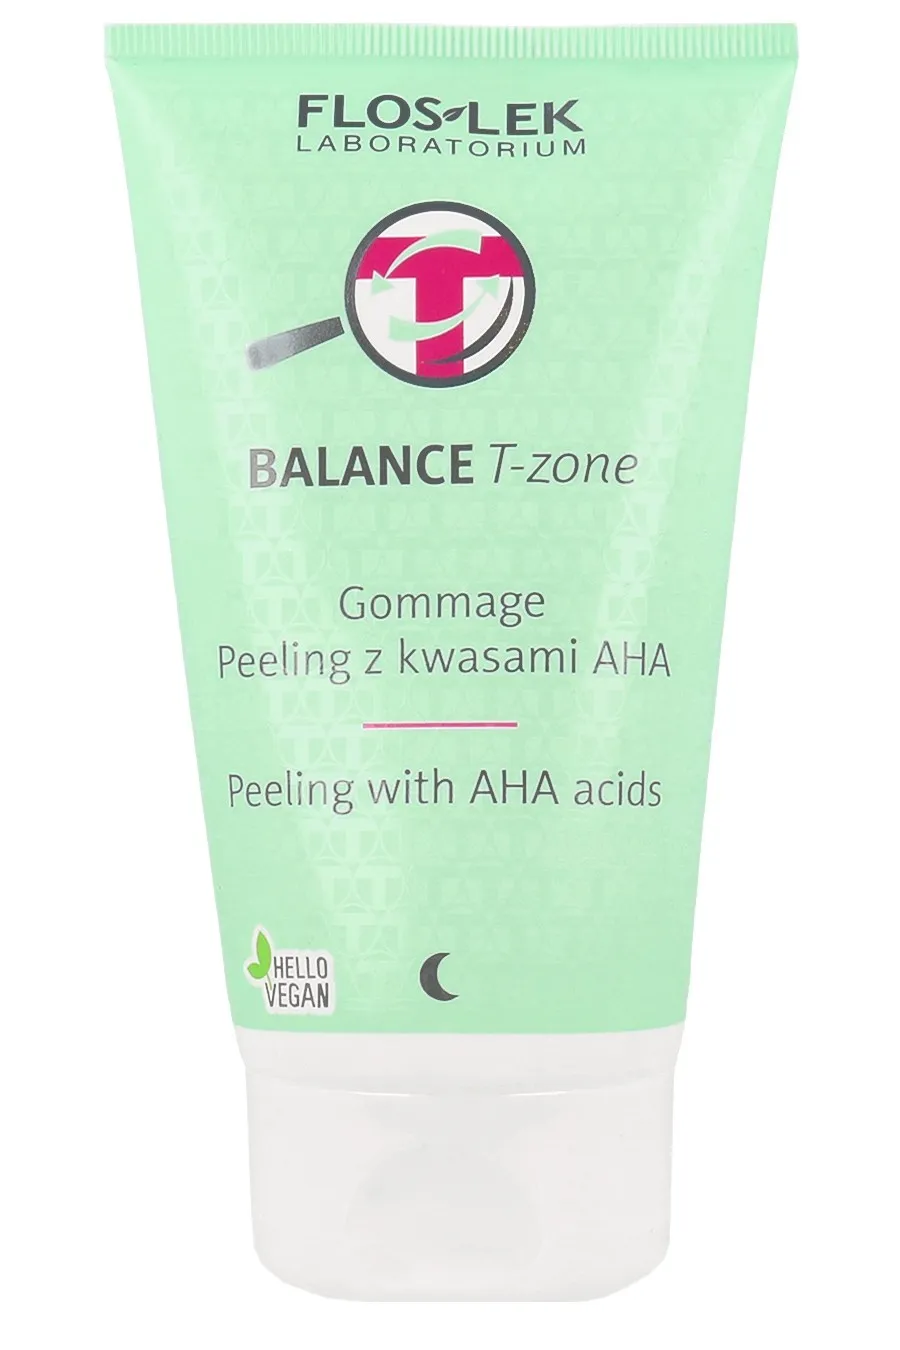 Flos-Lek Balance T-Zone, gommage peeling z kwasami AHA, 125 g